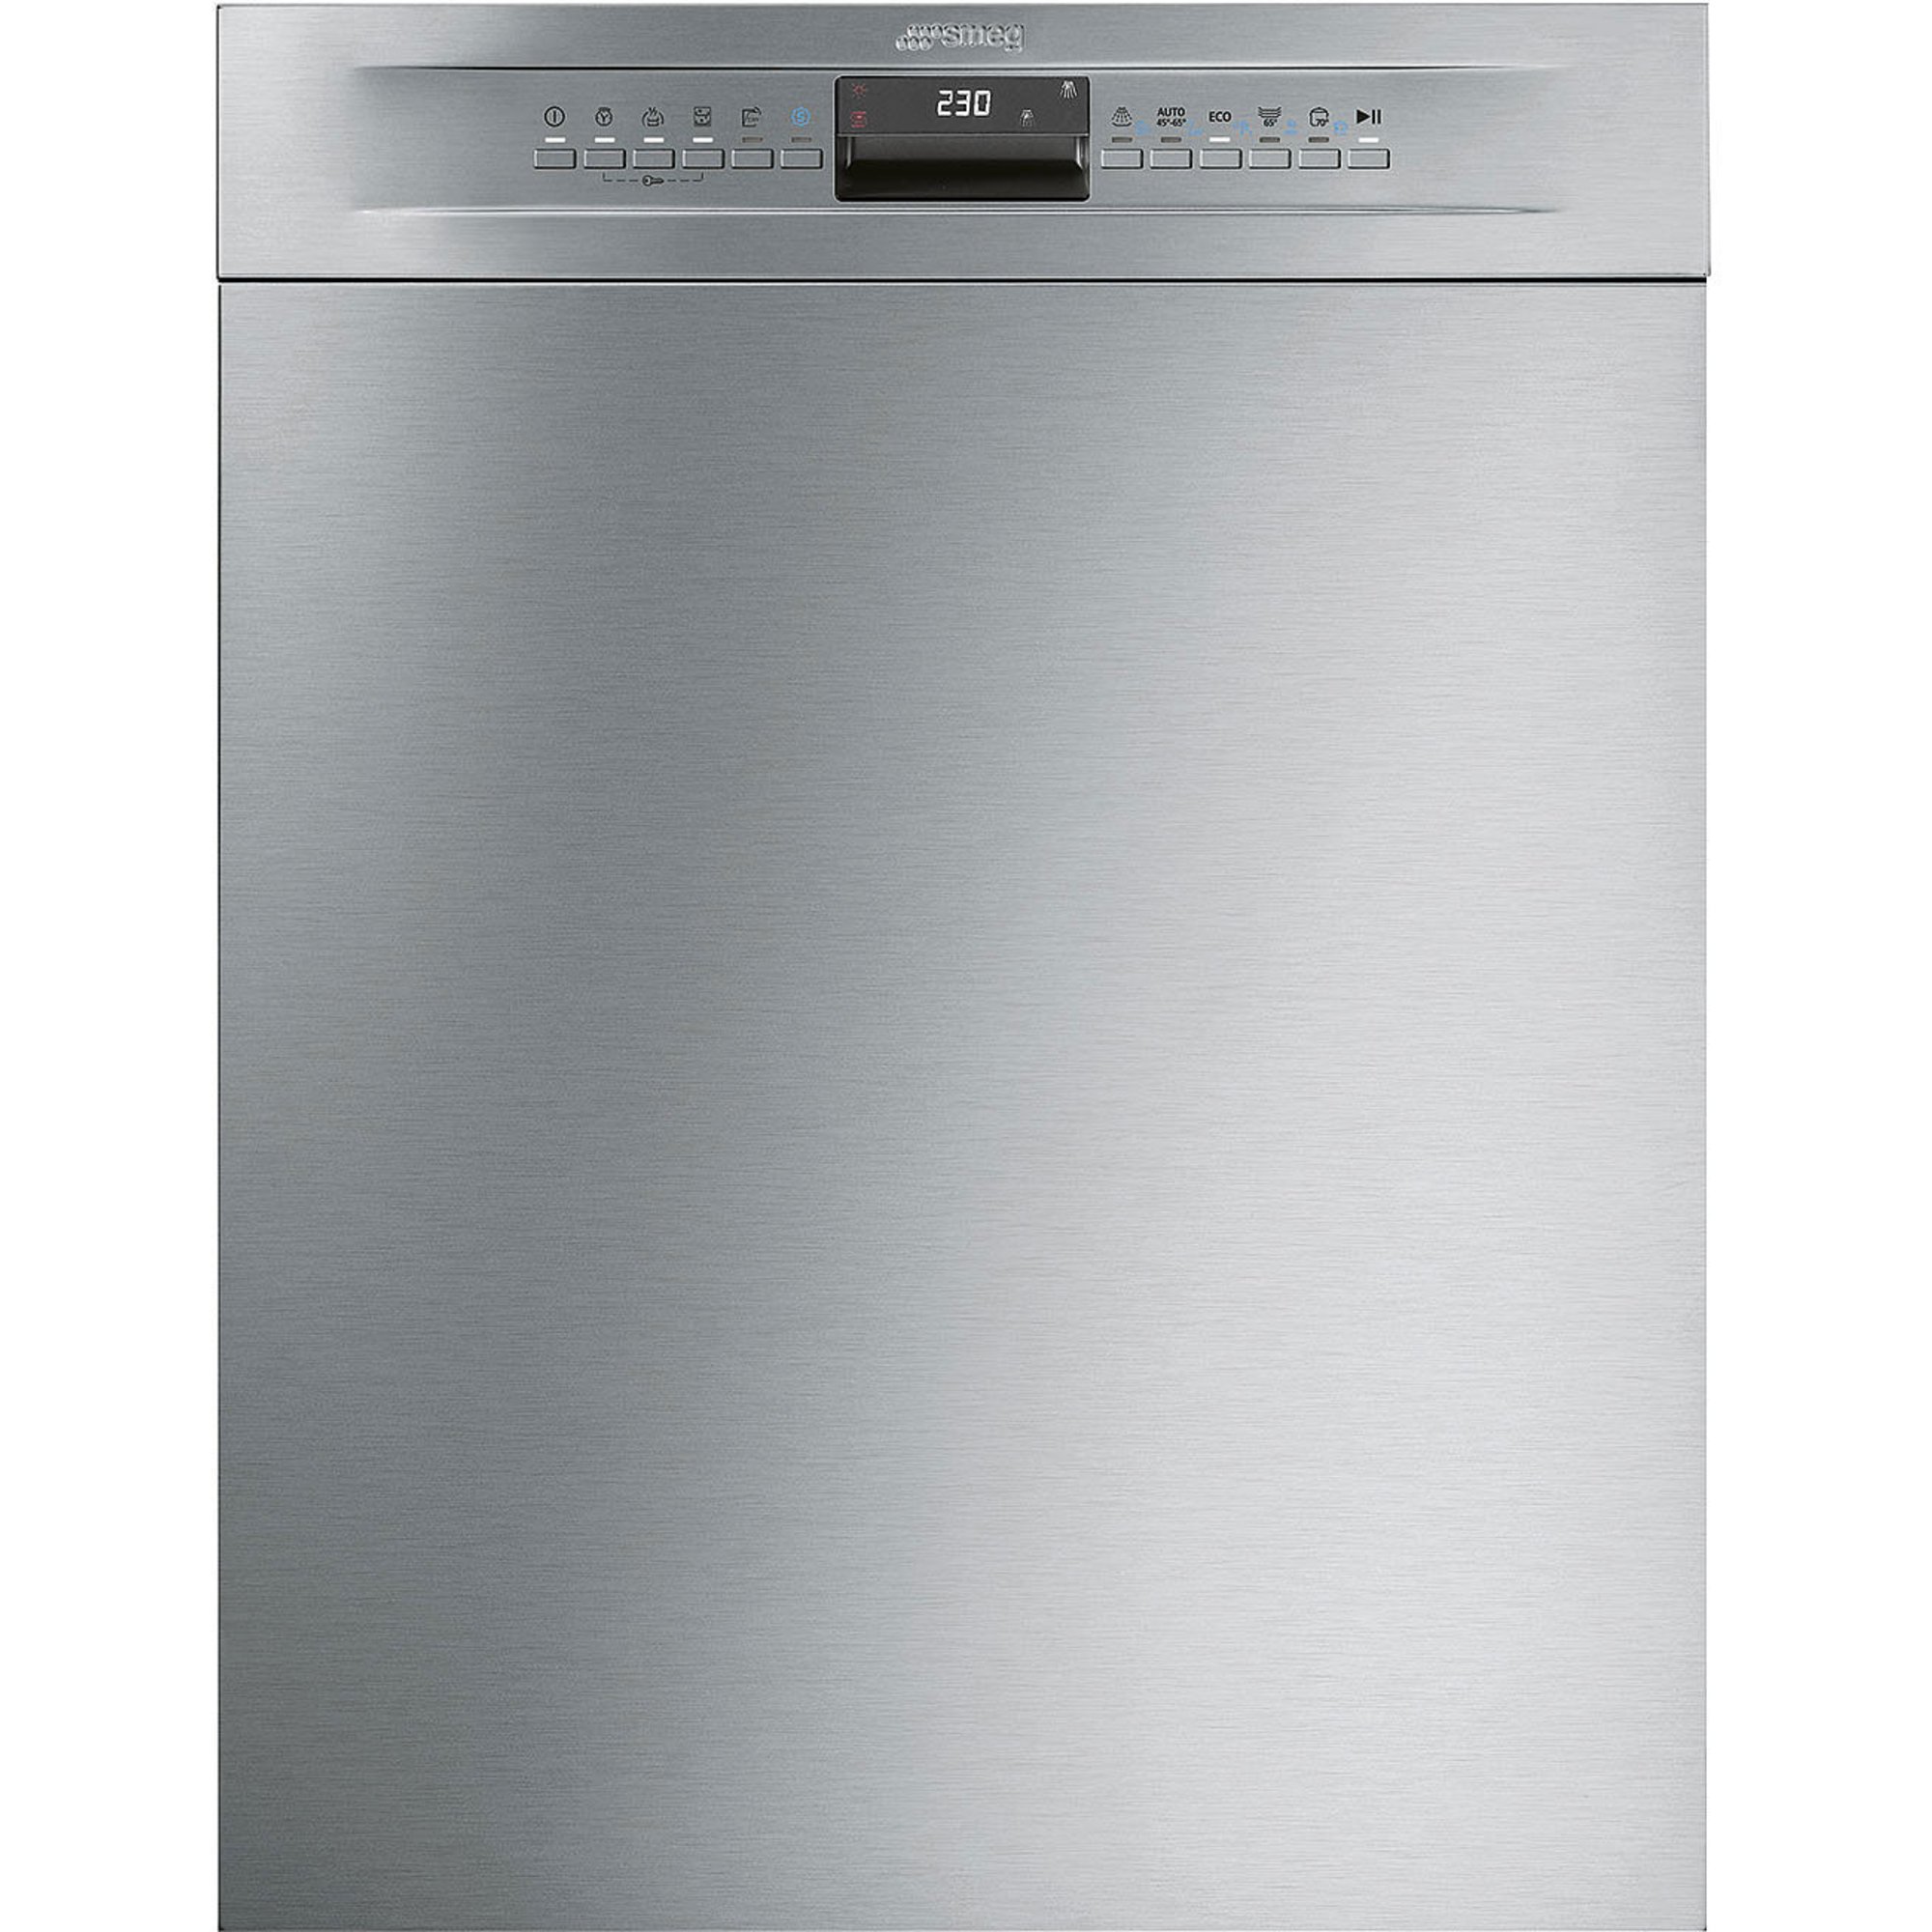 Smeg LSP234CX opvaskemaskine til underbygning